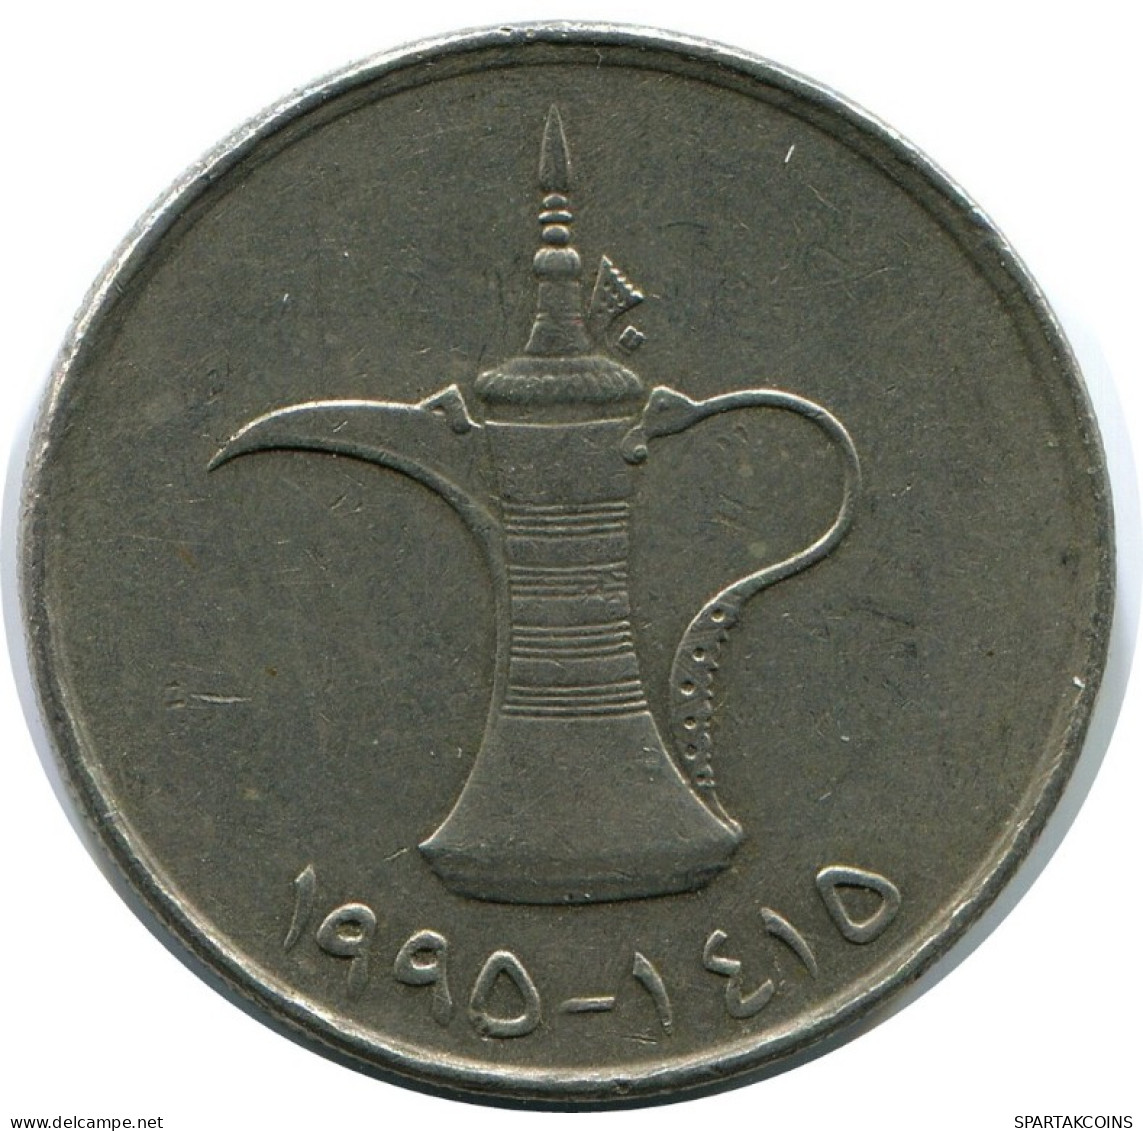 1 DIRHAM 1995 UAE UNITED ARAB EMIRATES Islámico Moneda #AK160.E.A - Ver. Arab. Emirate